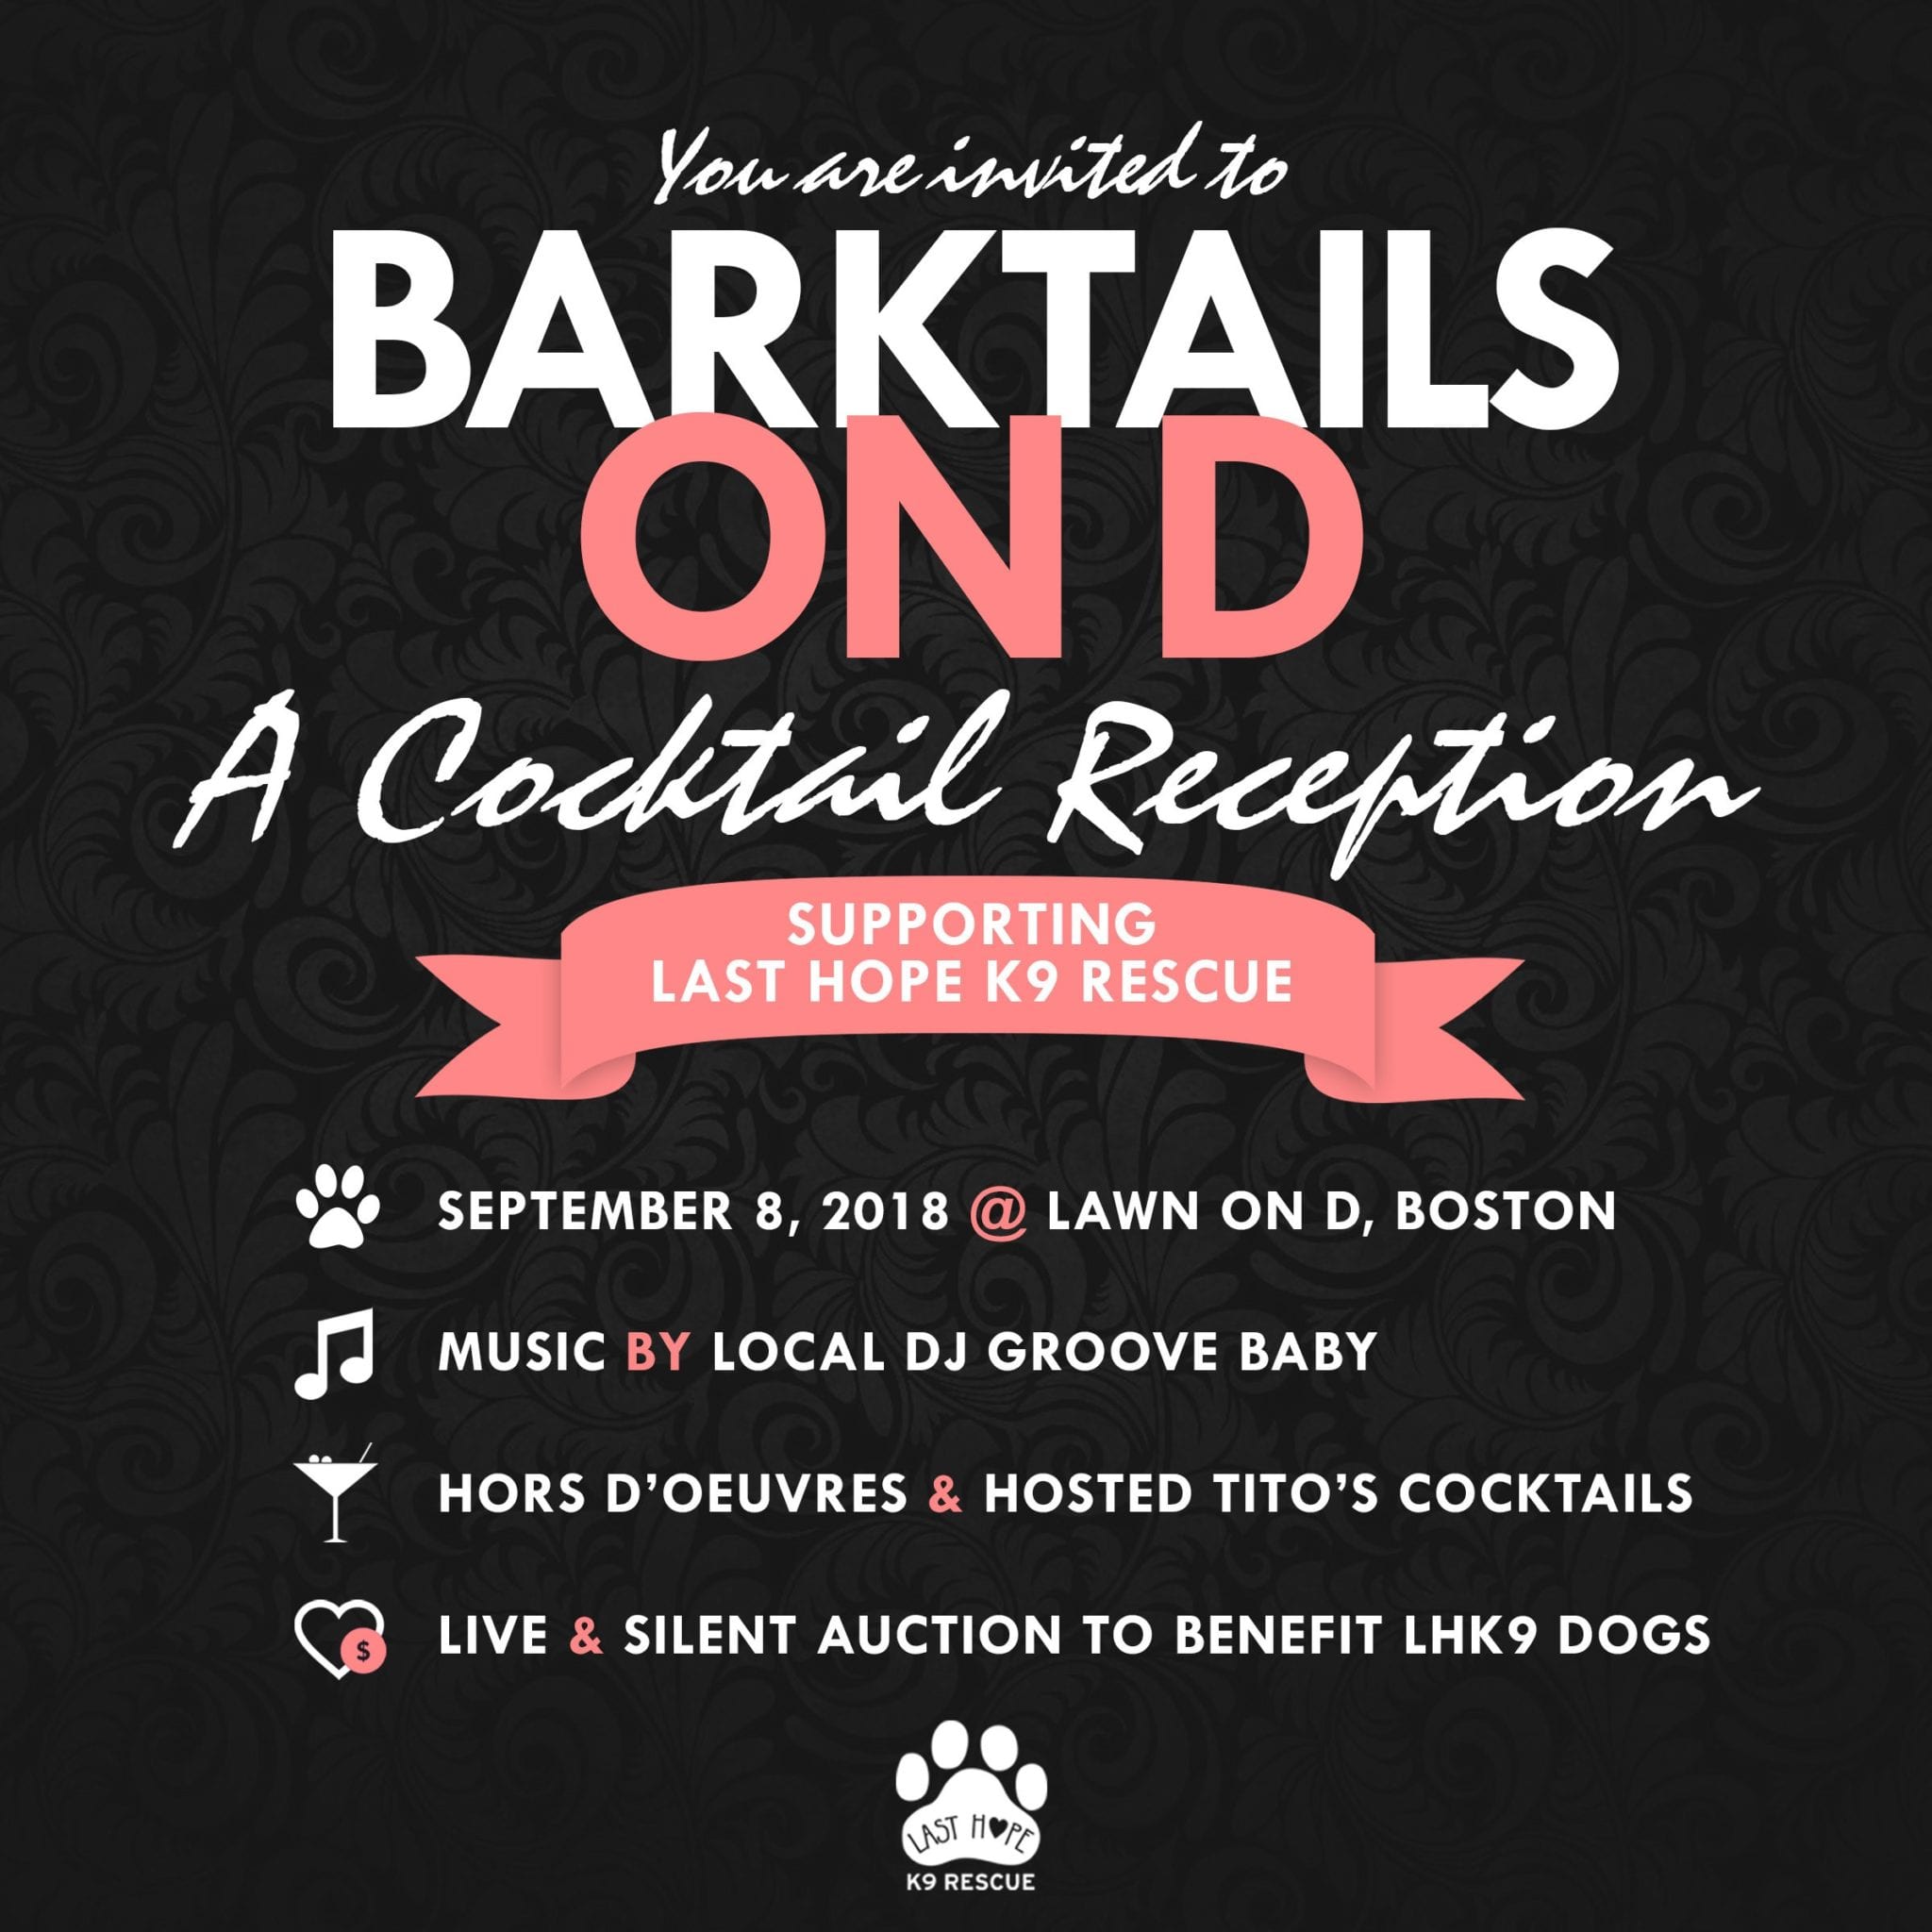 Barktails on D - A Cocktail Reception